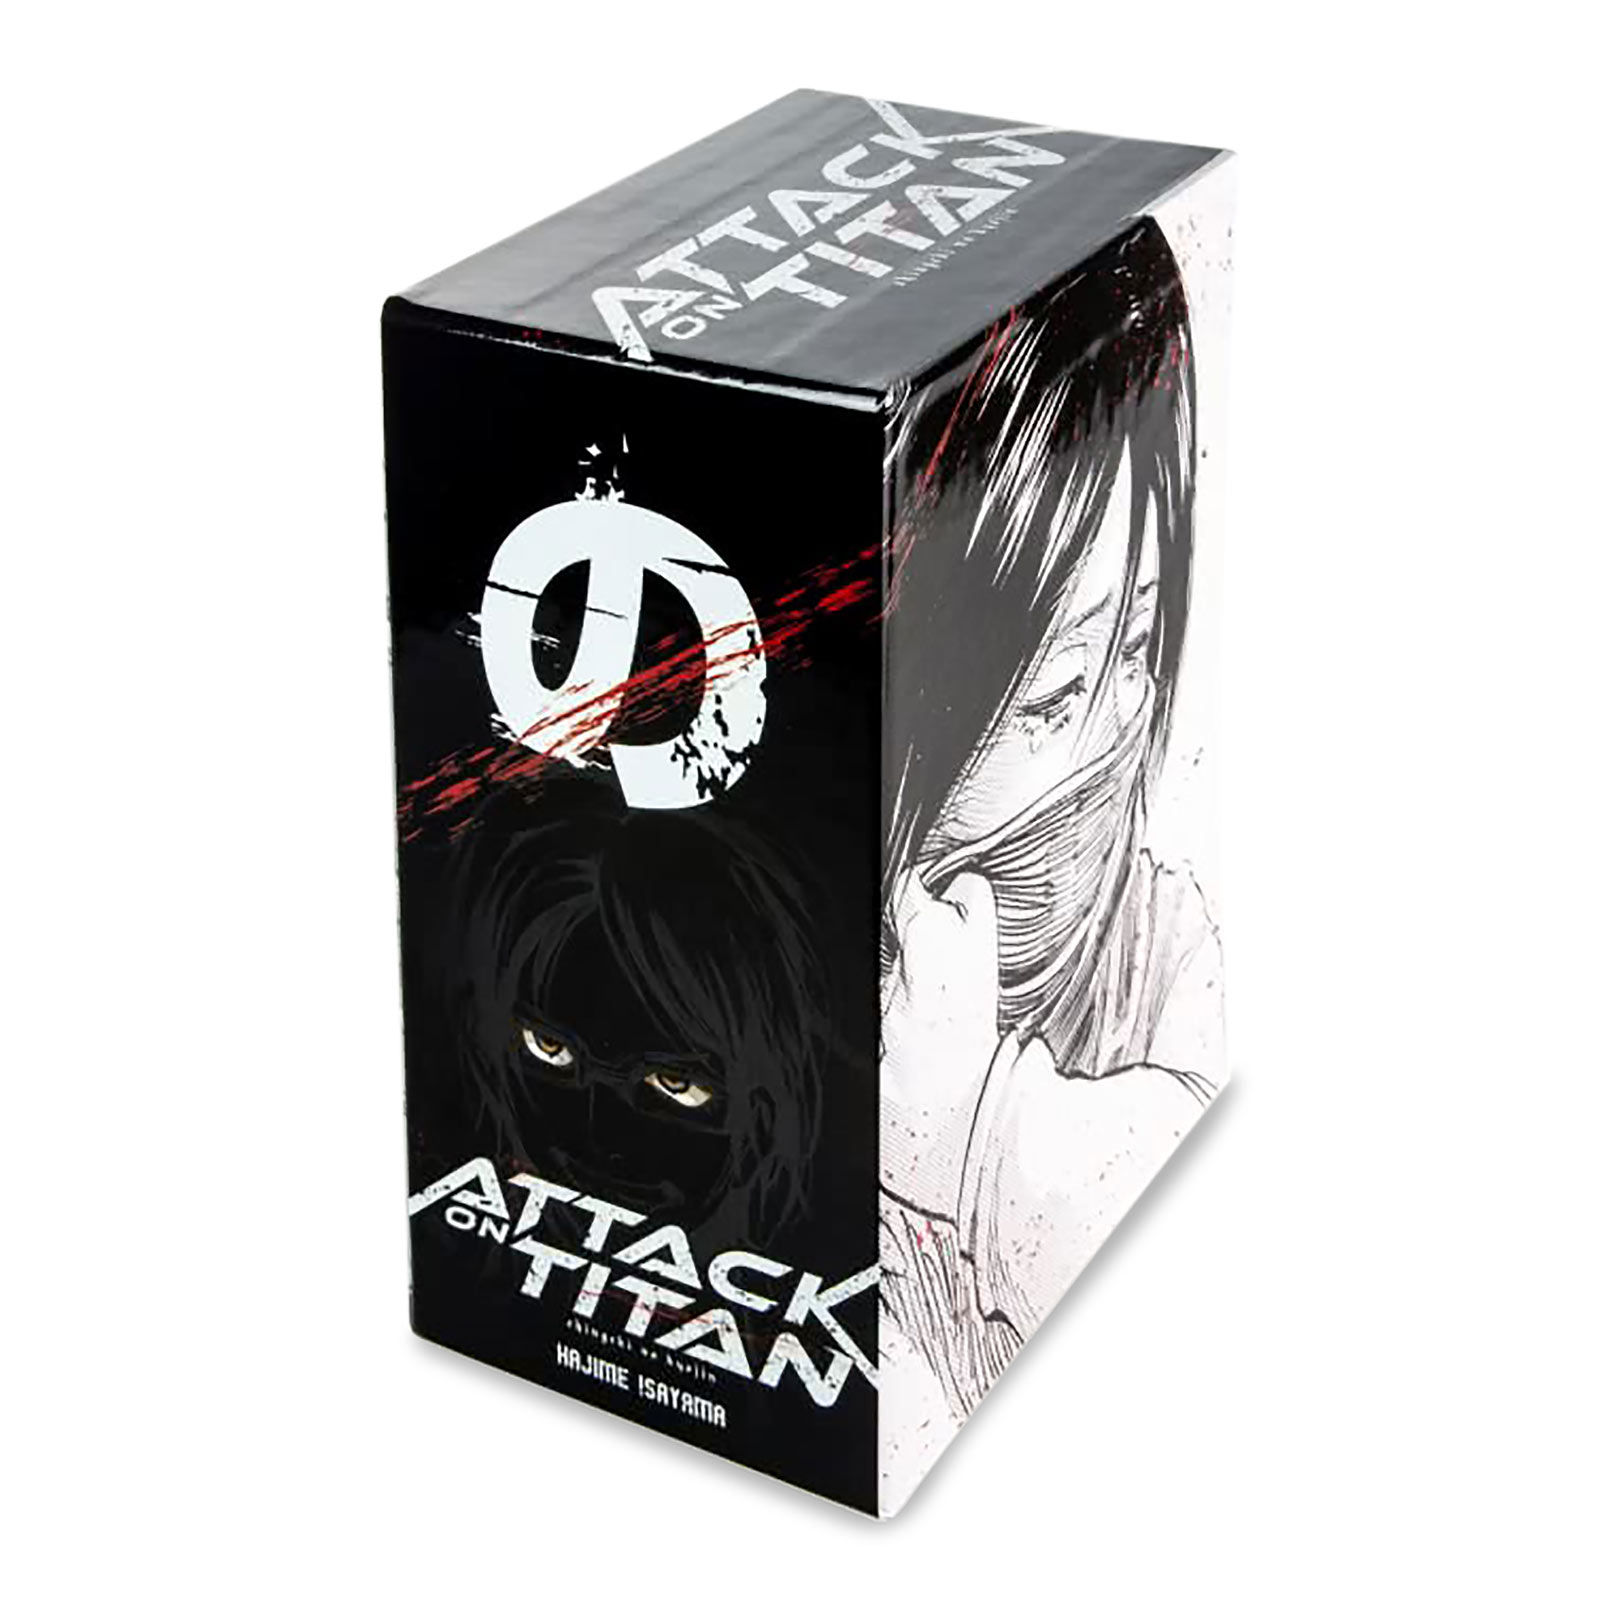 Attack on Titan - Coffret de collection volumes 11-15